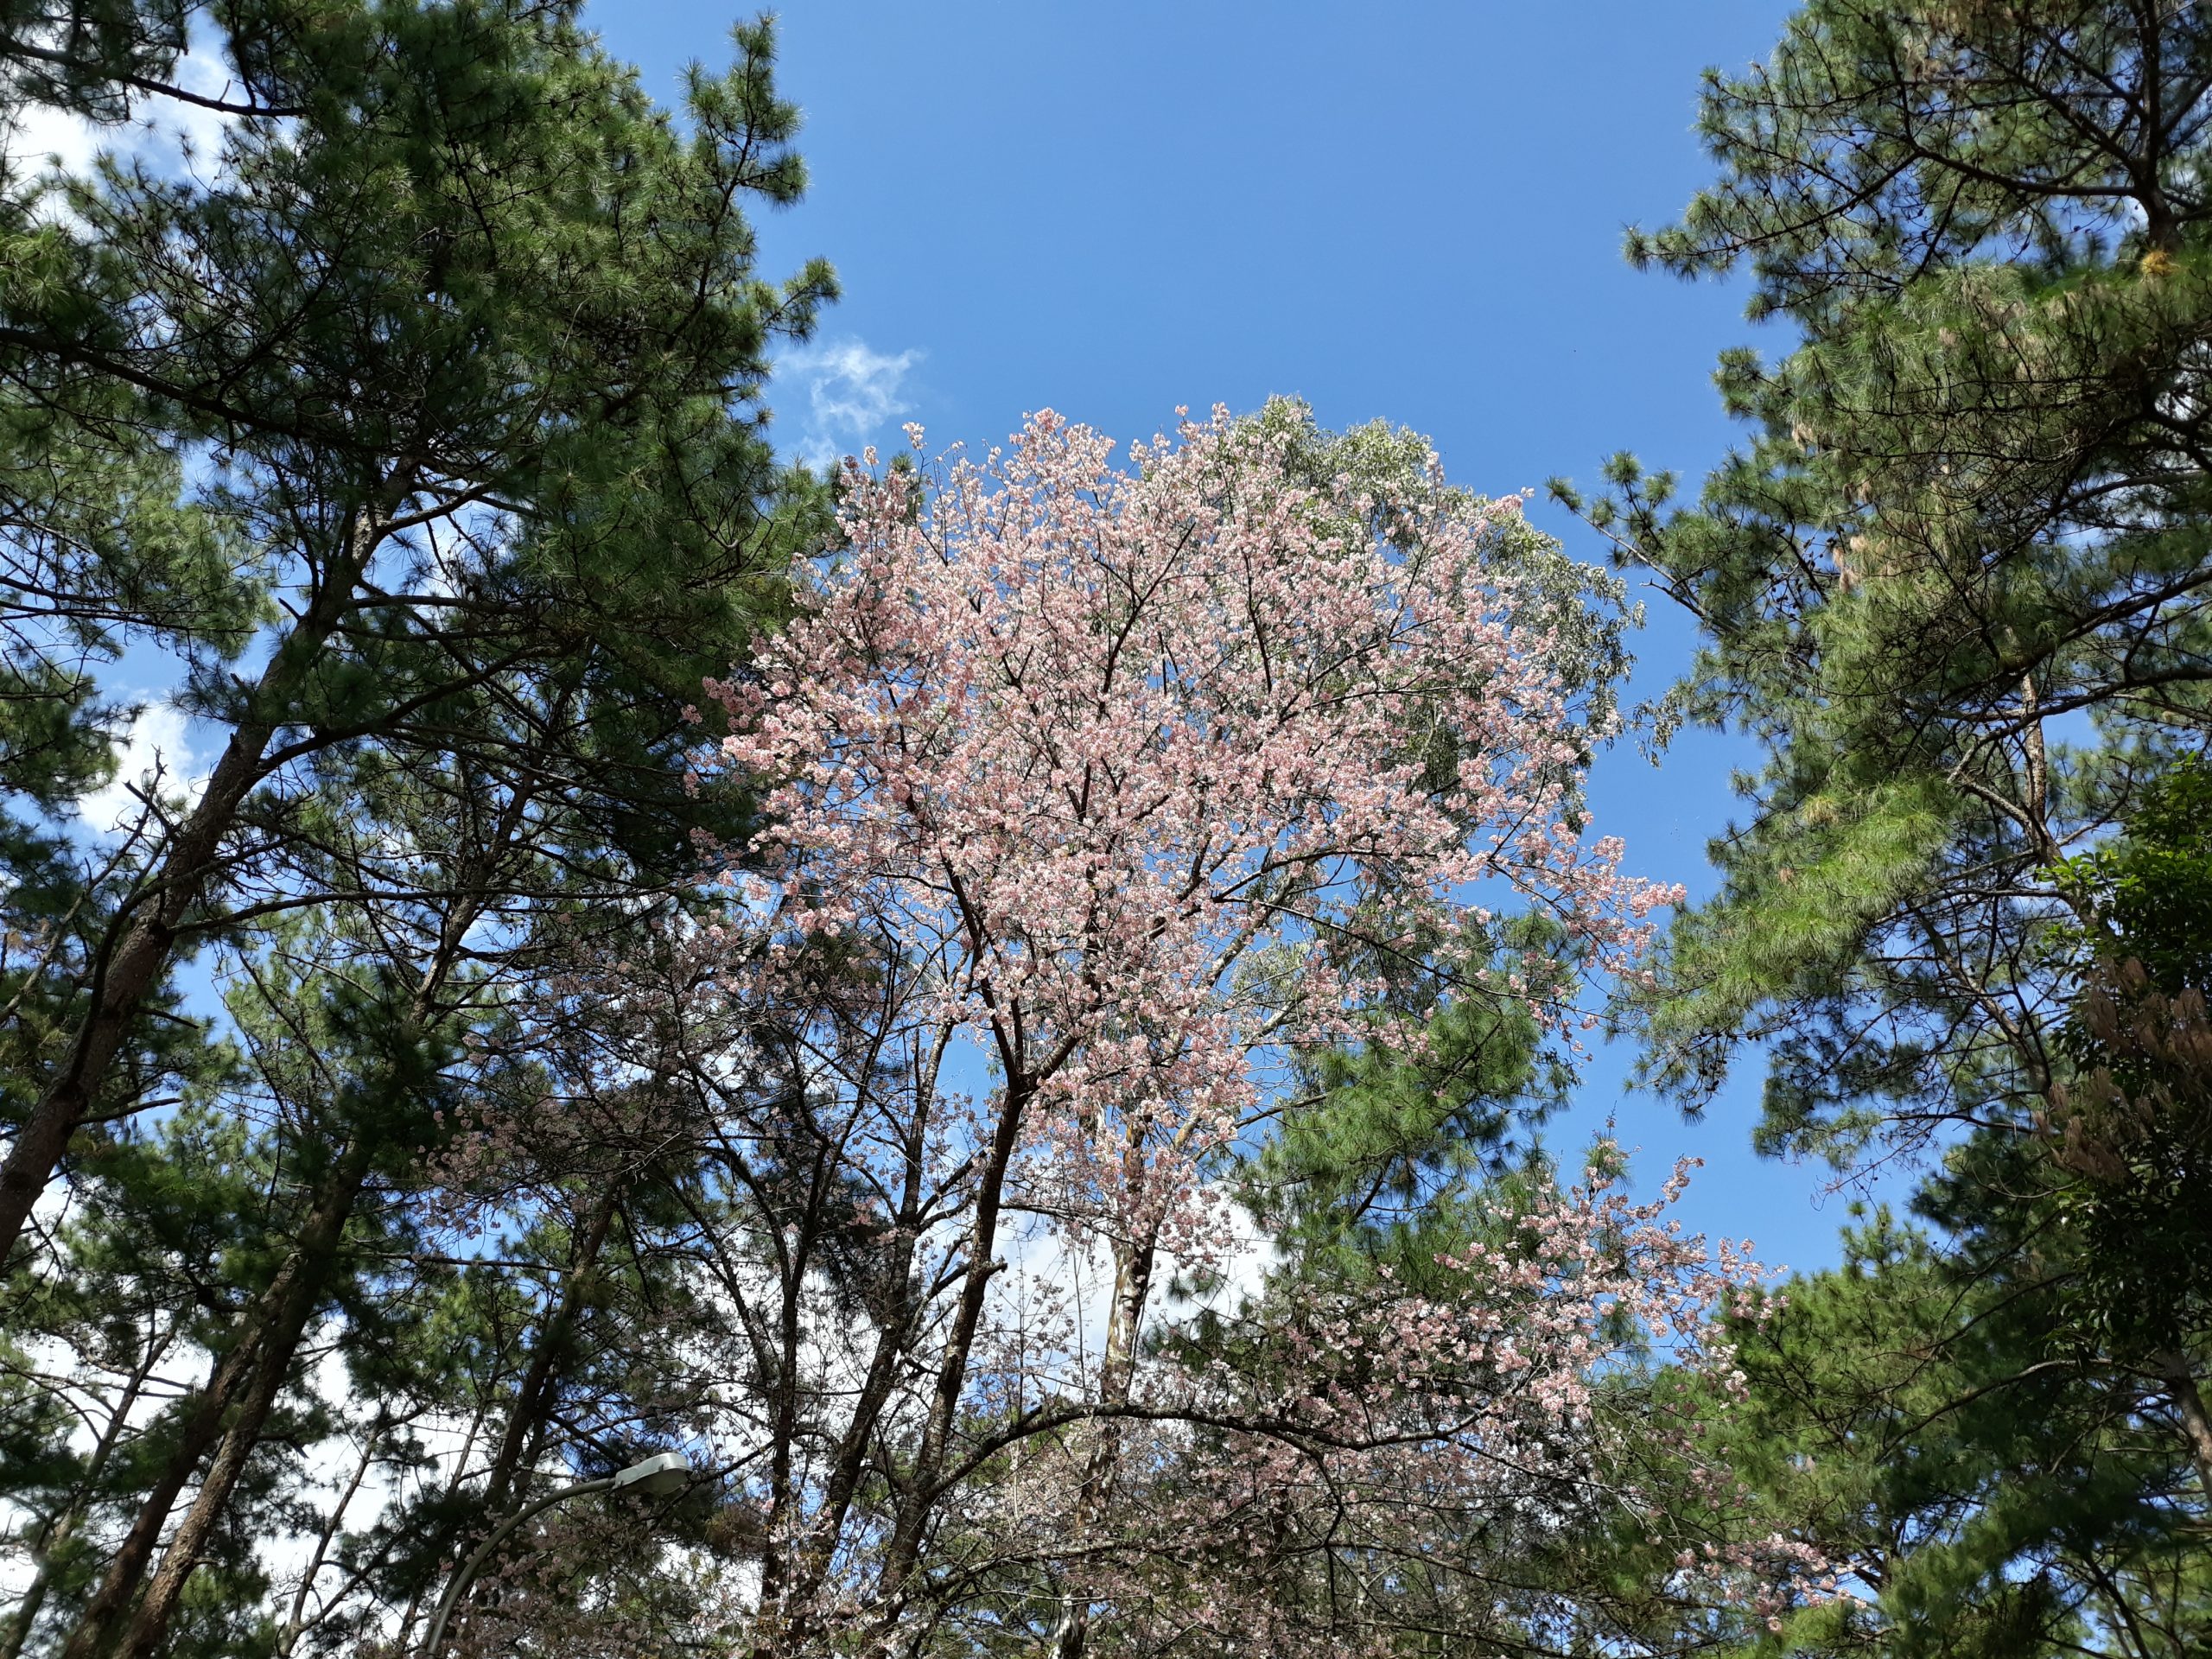 Cherry blossom between pine trees